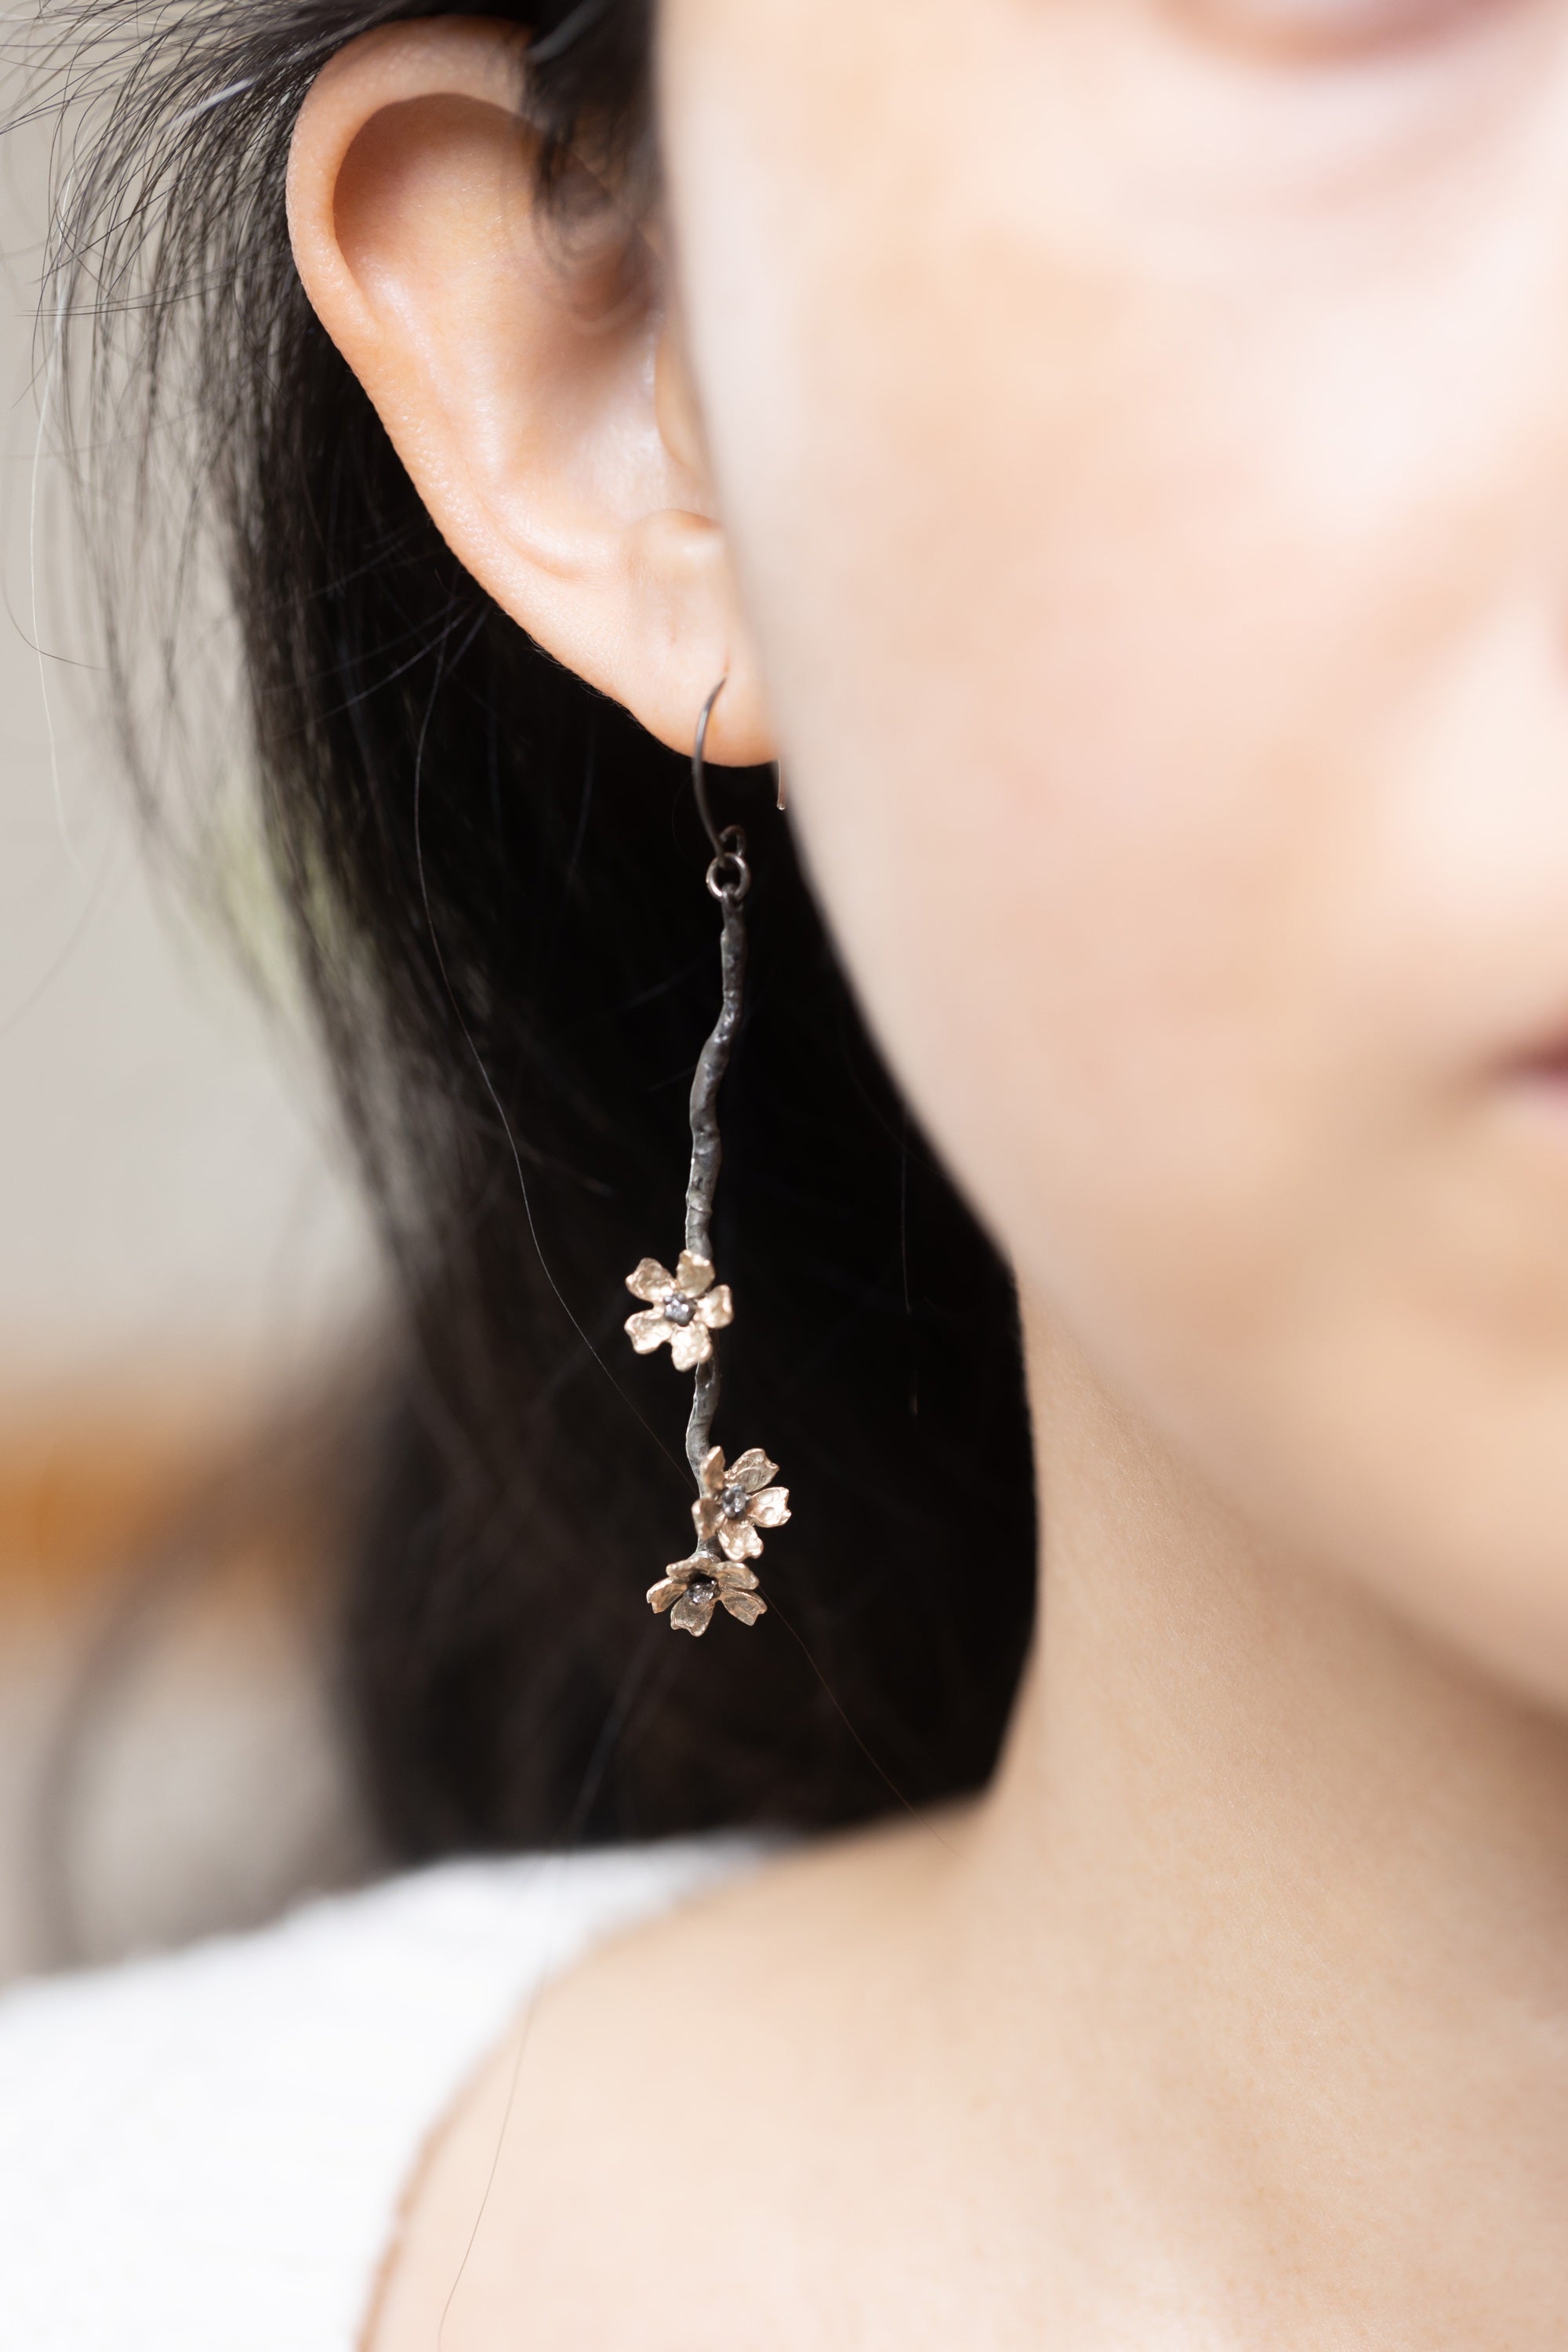 Six Small Sakura Cherry Blossoms on 5cm Long Branch Earrings